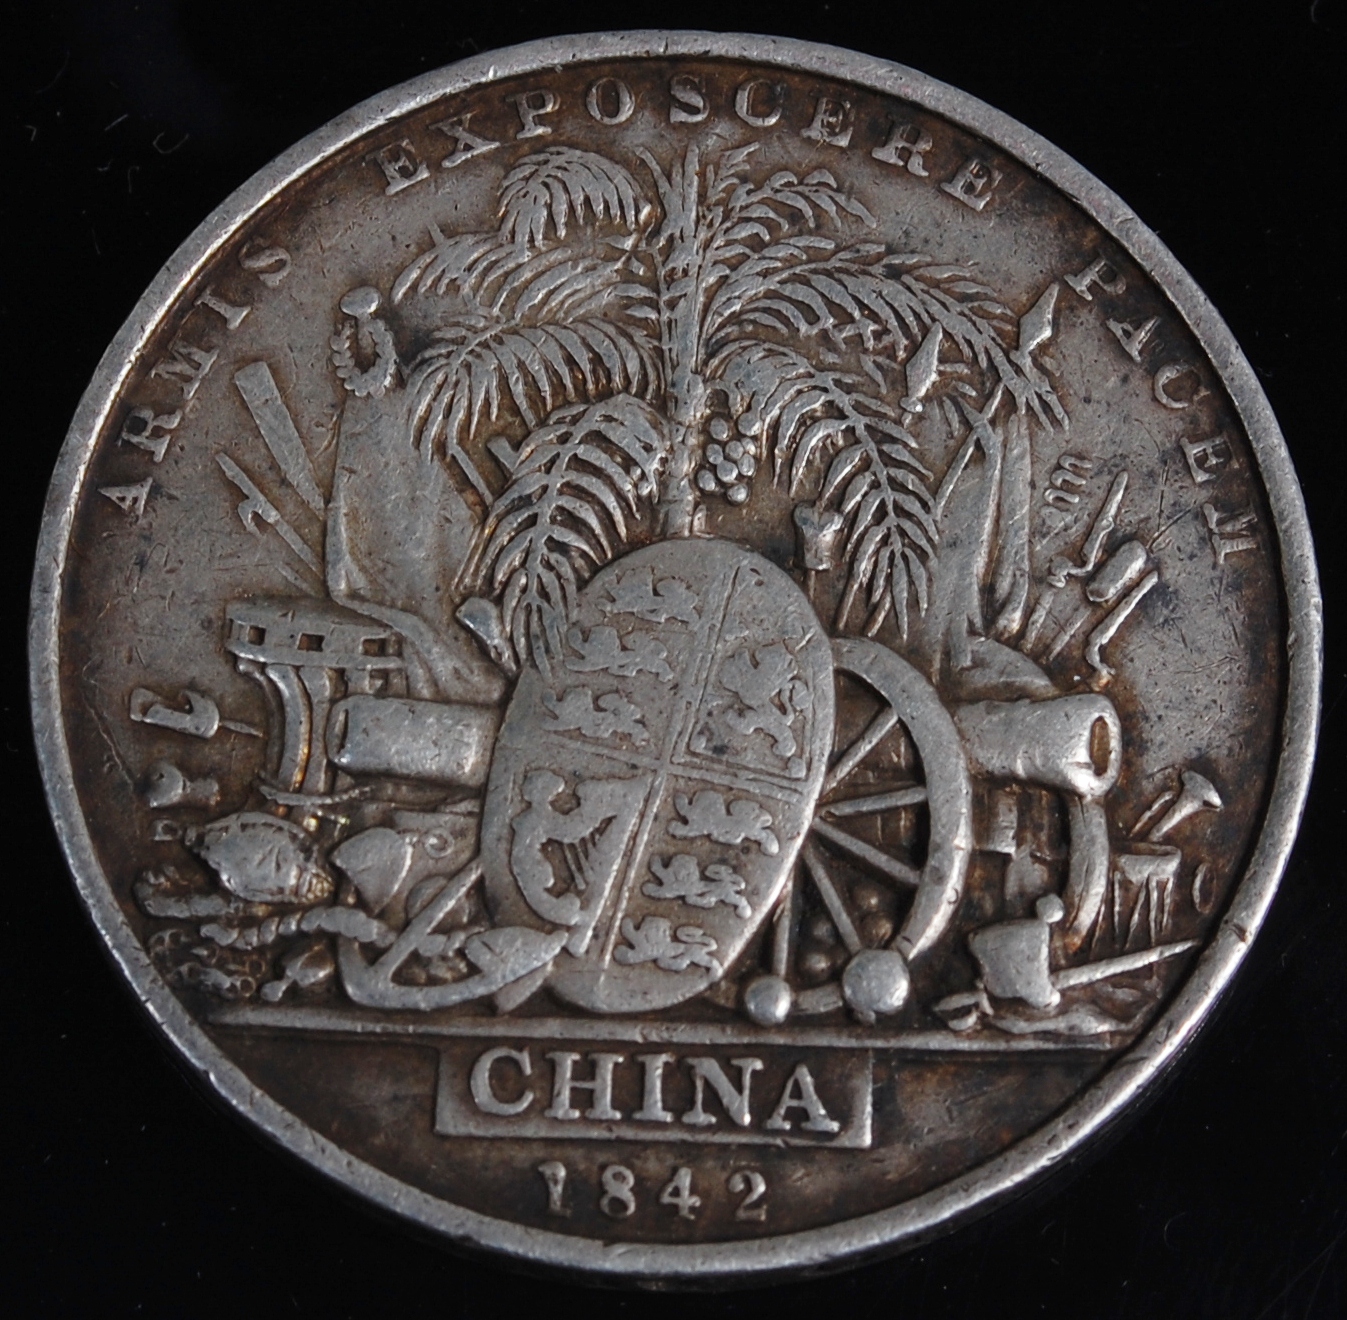 A British 1842 China war medal naming *** John Bragg Petty Officer H.M.S. Larne *, lacking